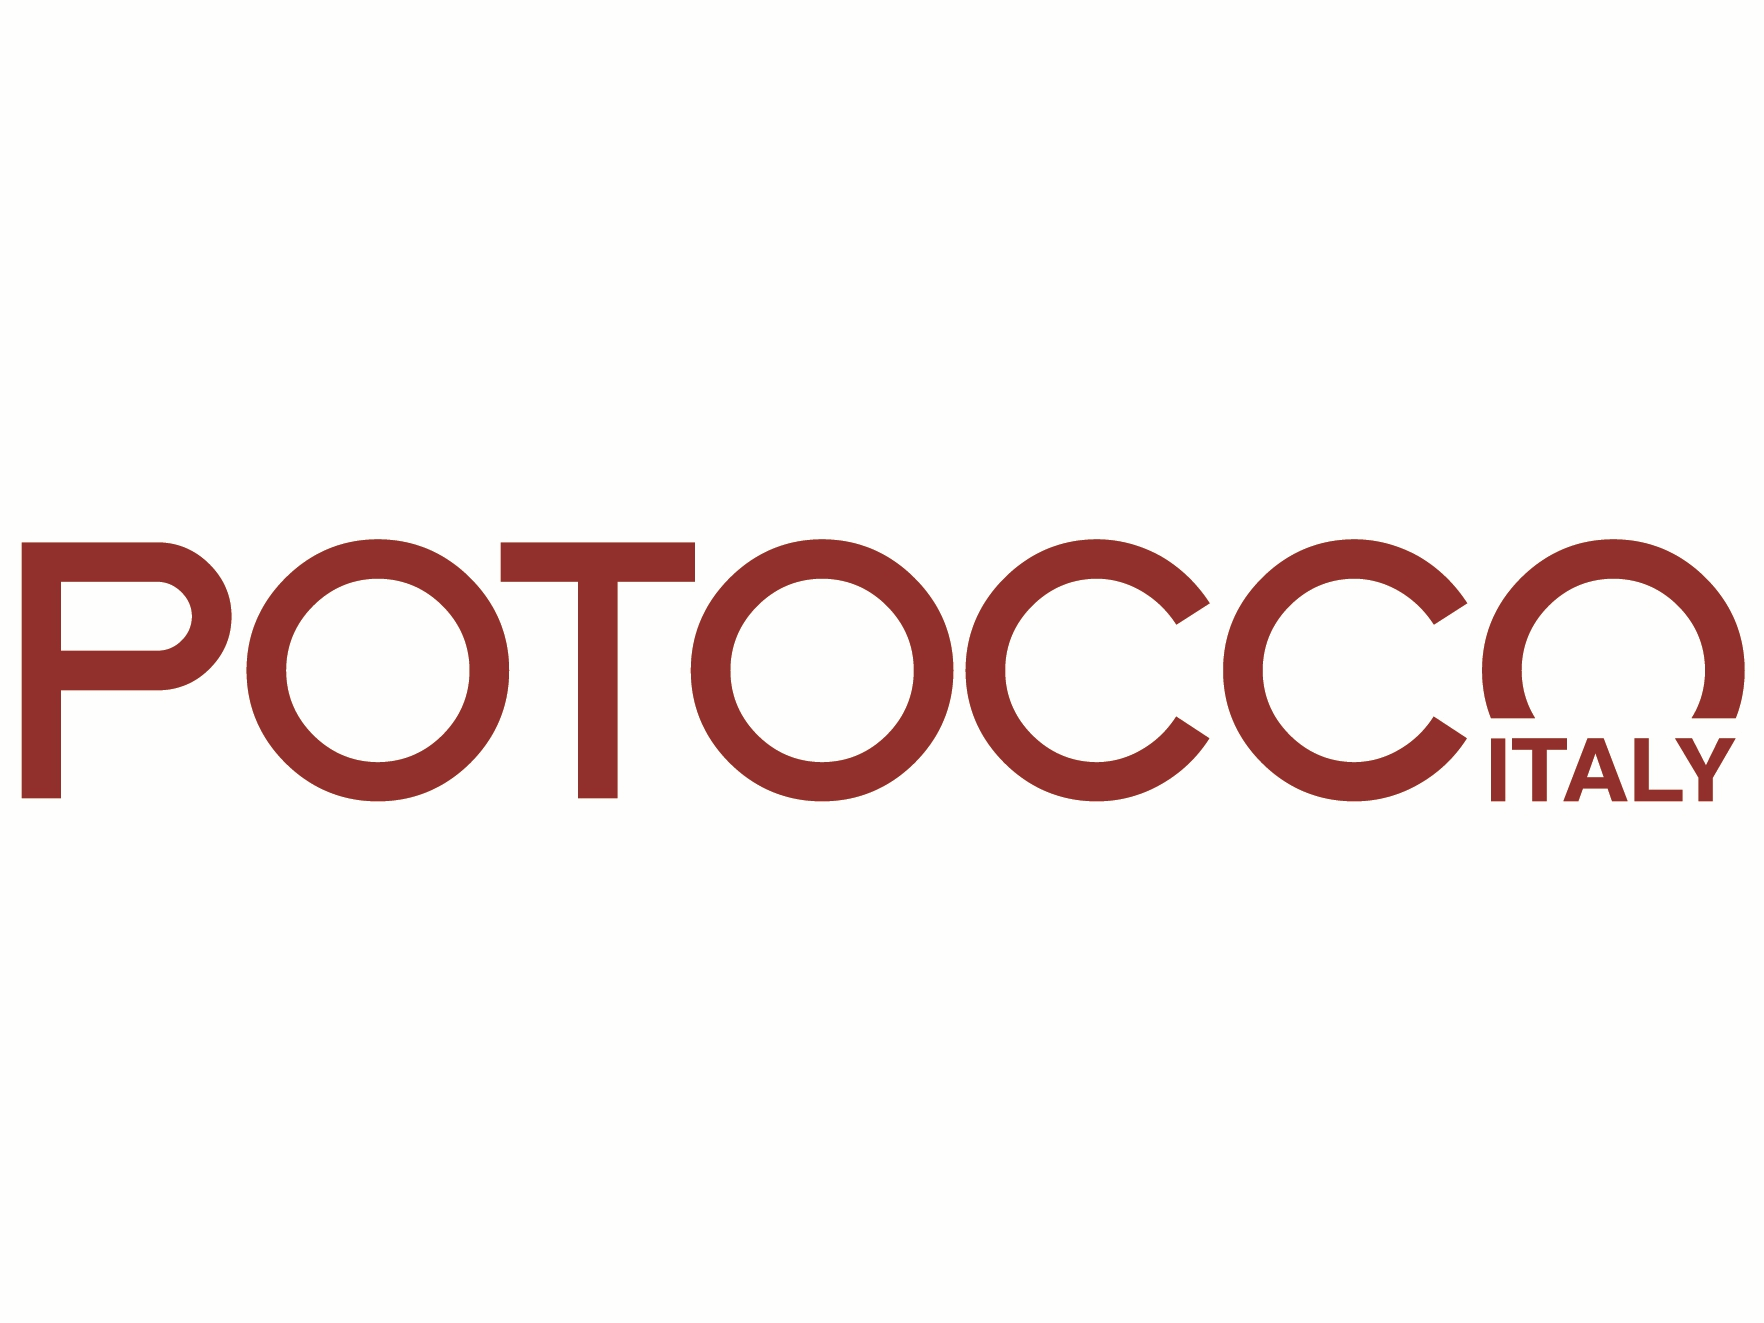 Potocco Logo - Potocco. Indoor and outdoor furniture